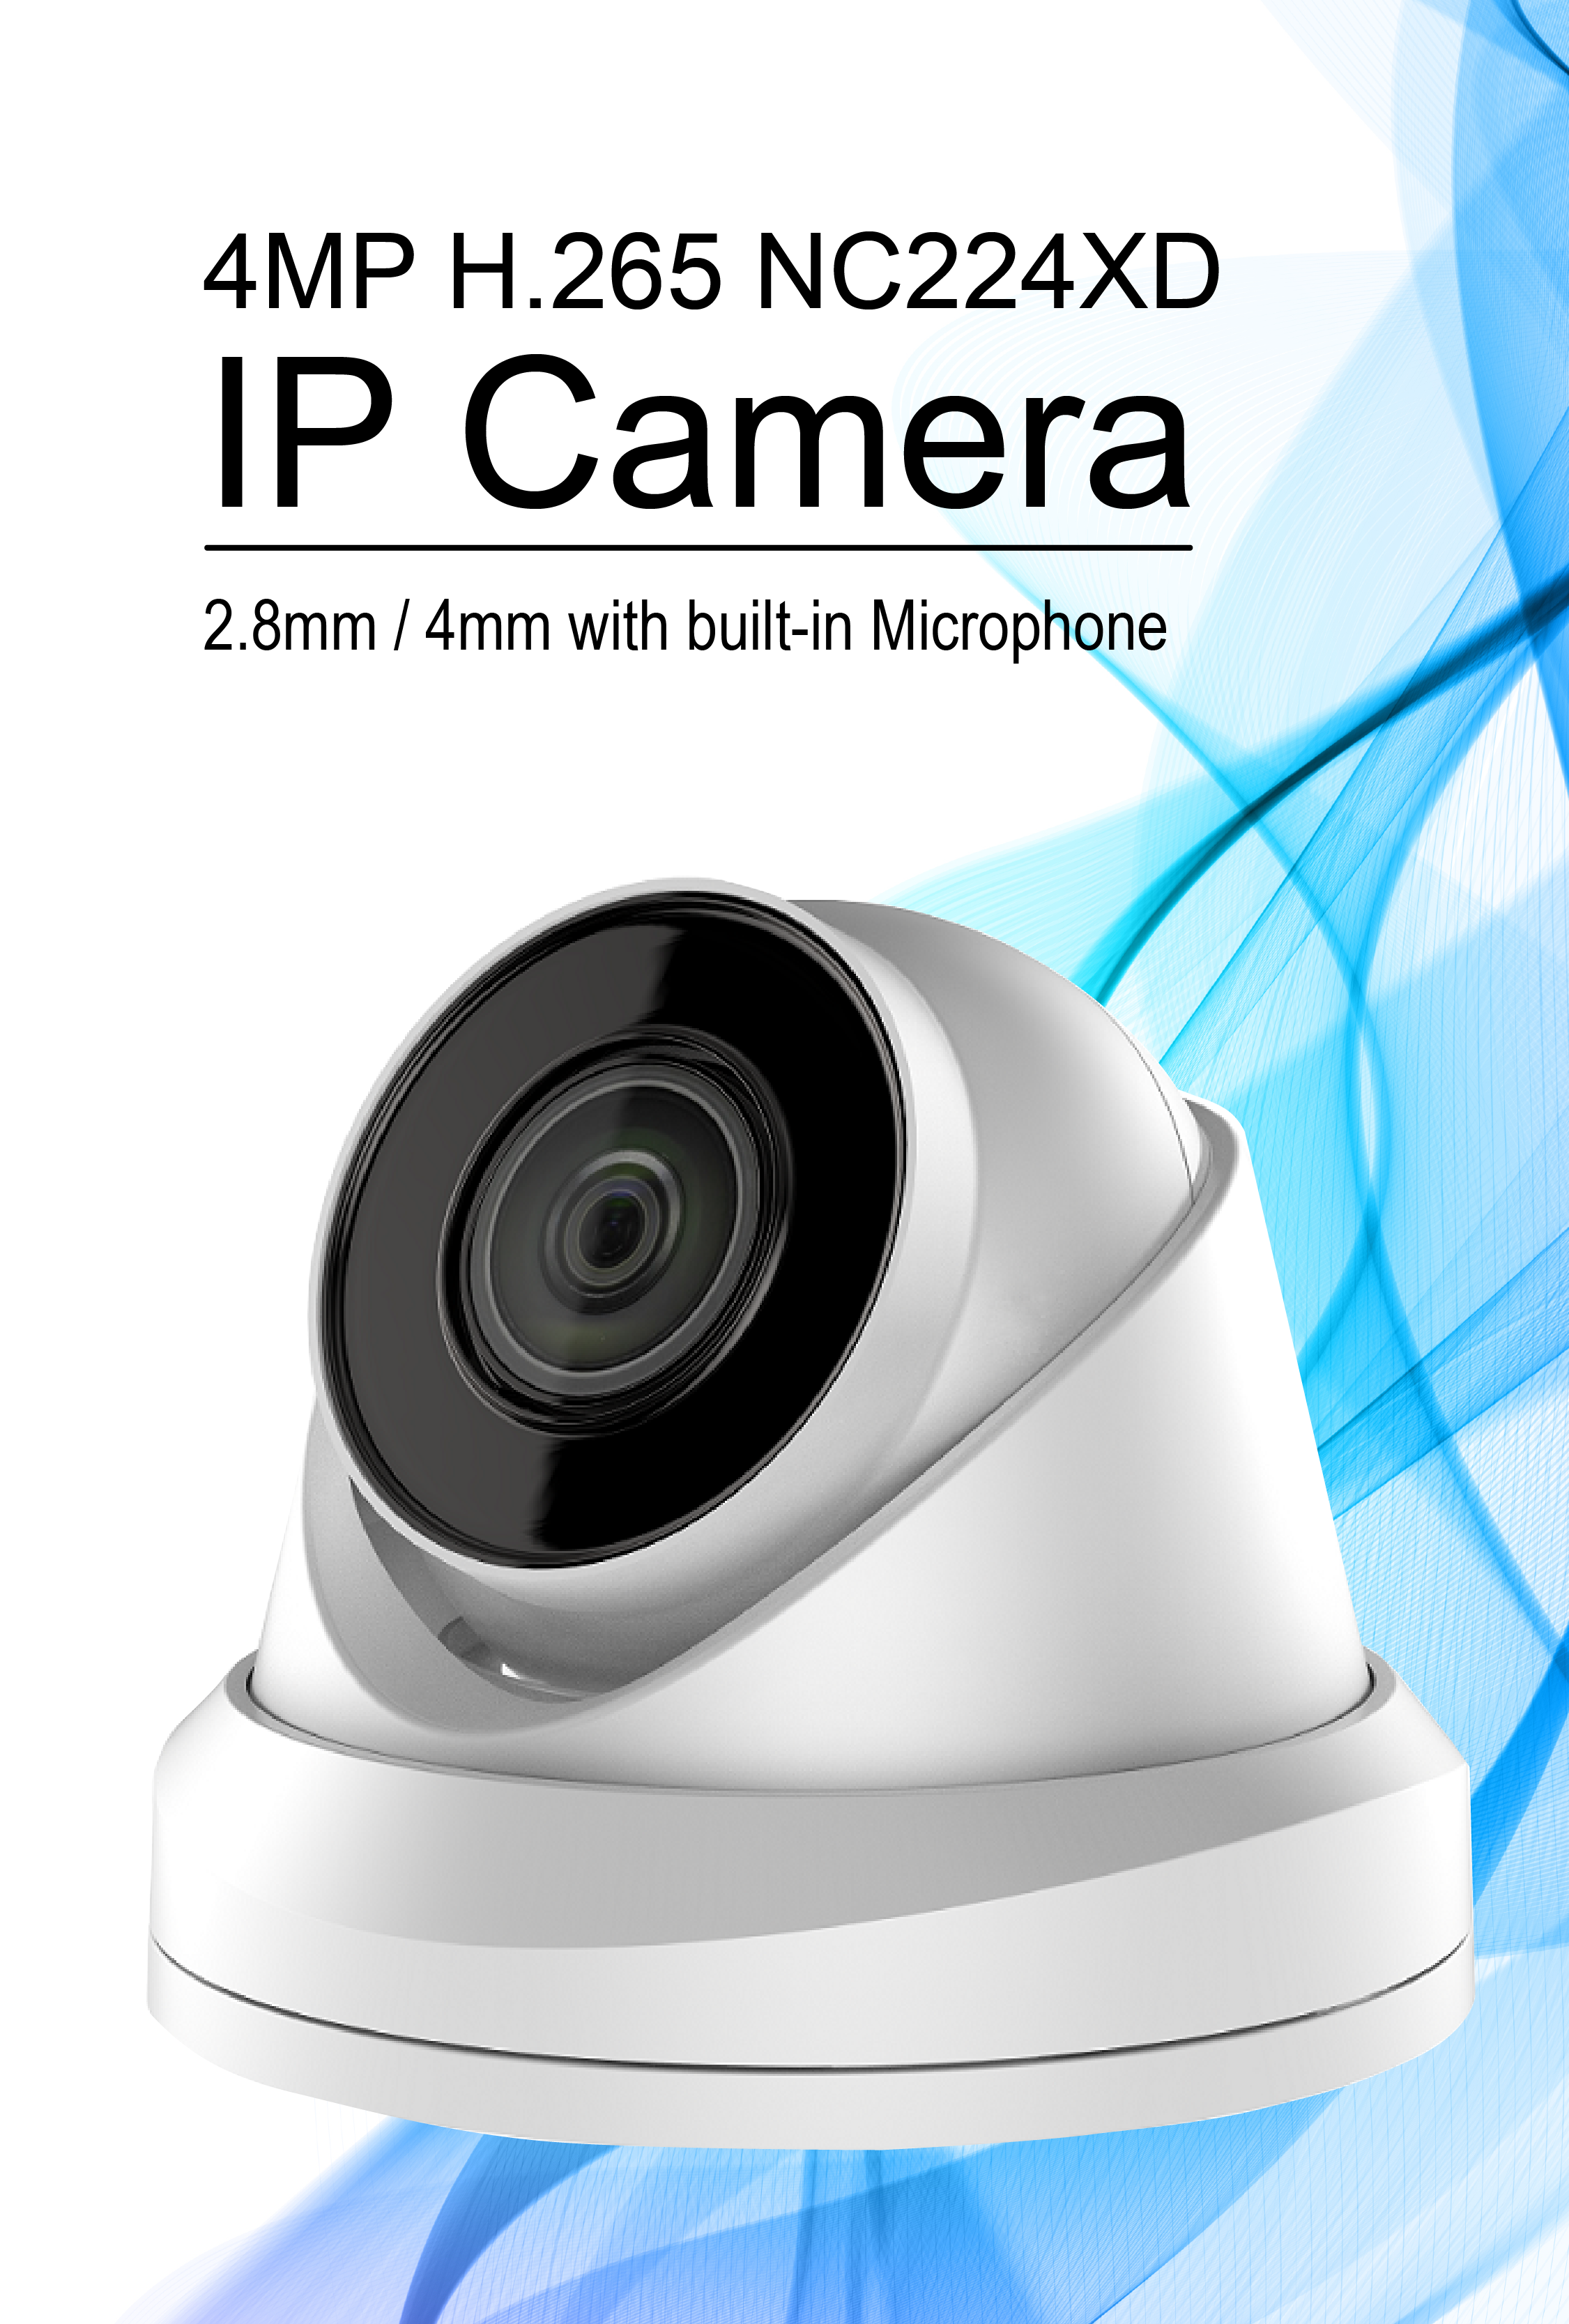 CCTV Camera NC224